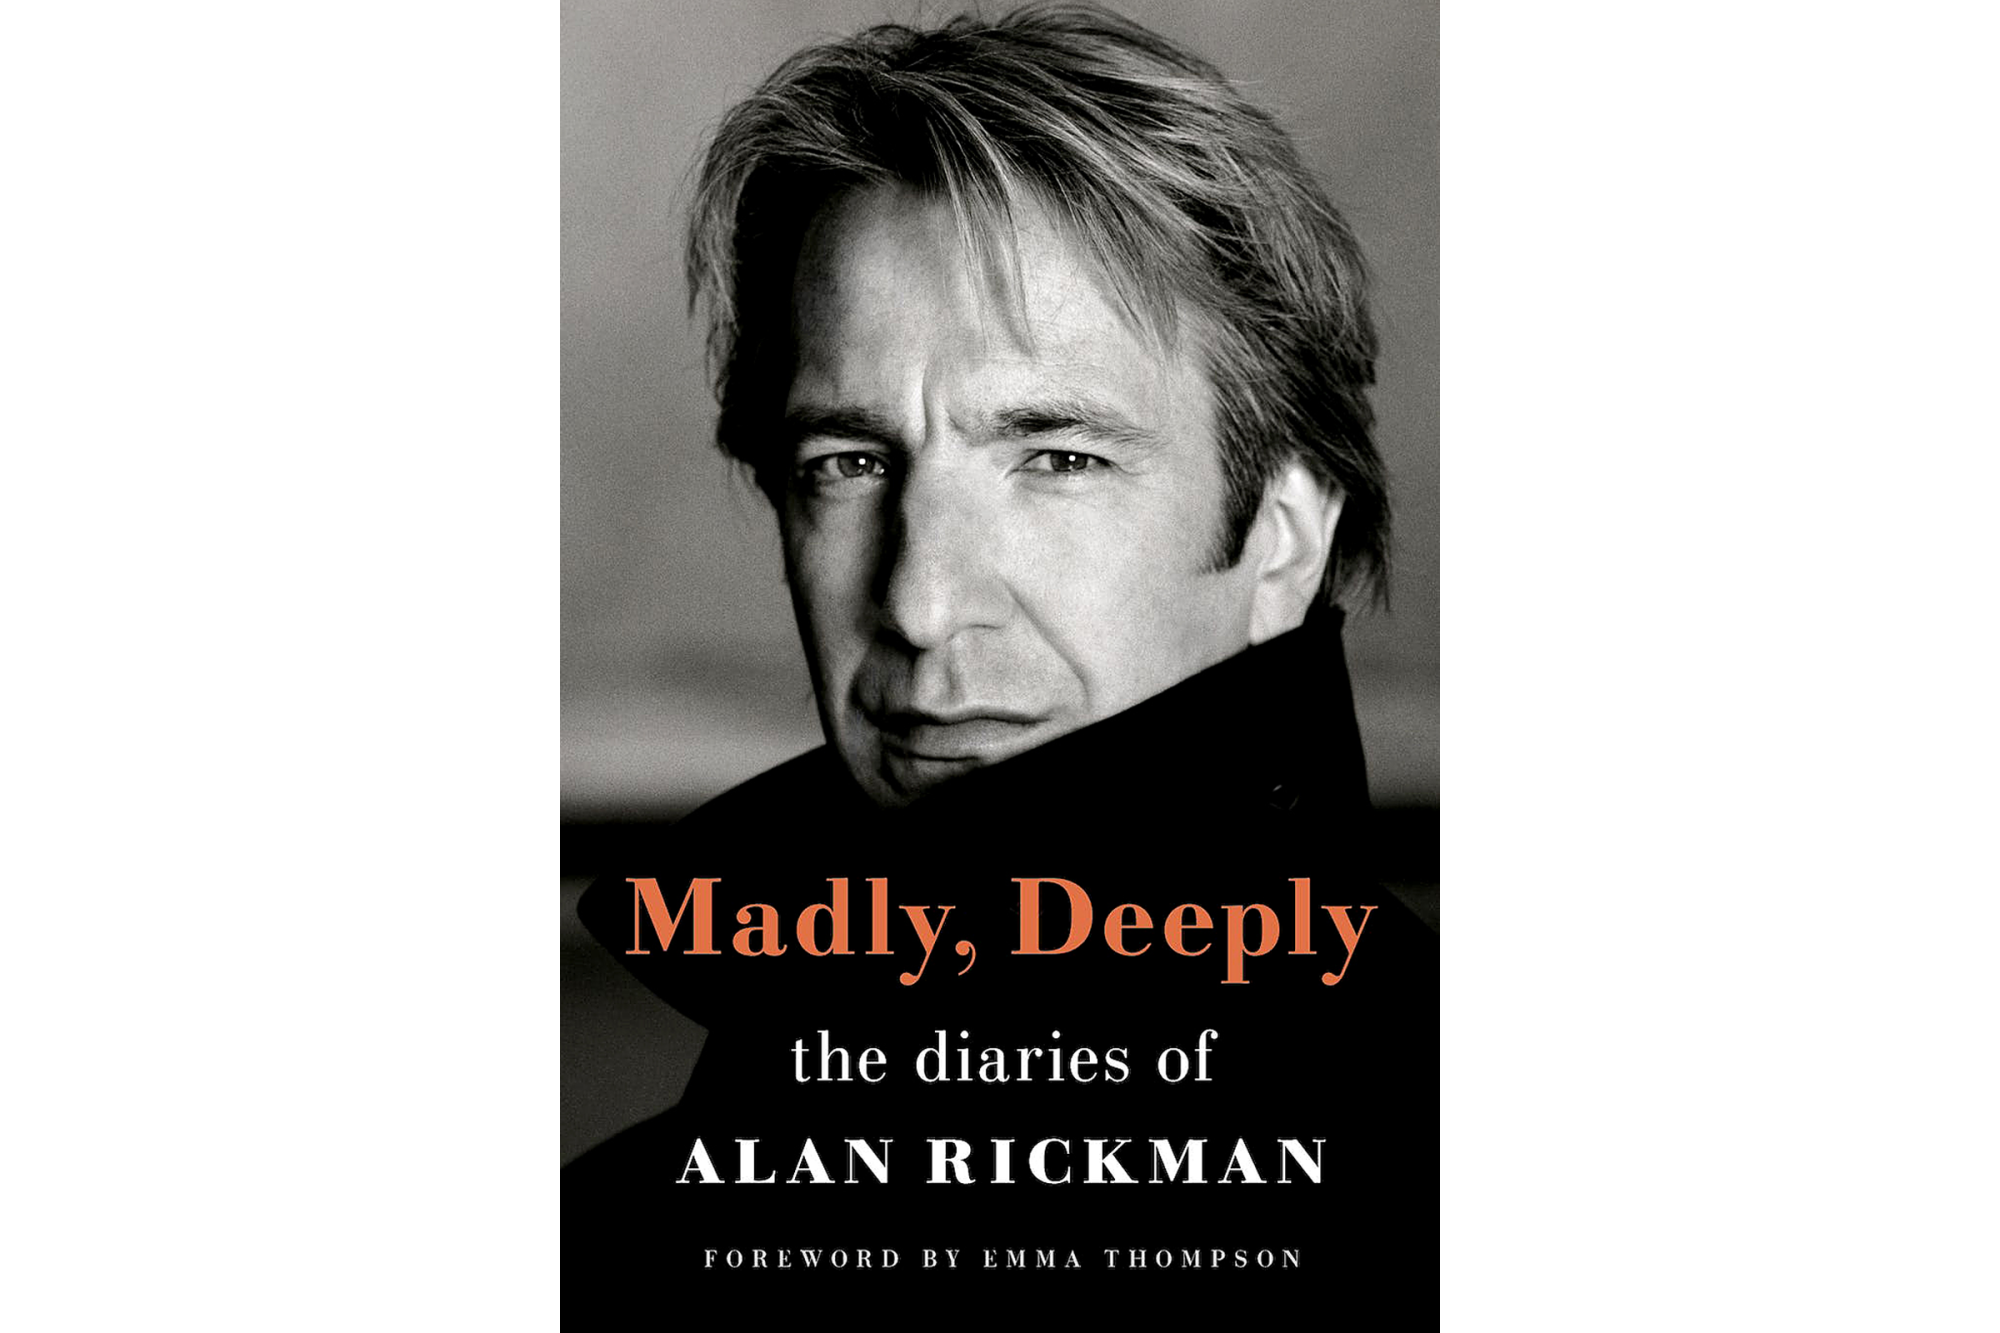 "Madly, Deeply: The Diaries of Alan Rickman" by Alan Rickman